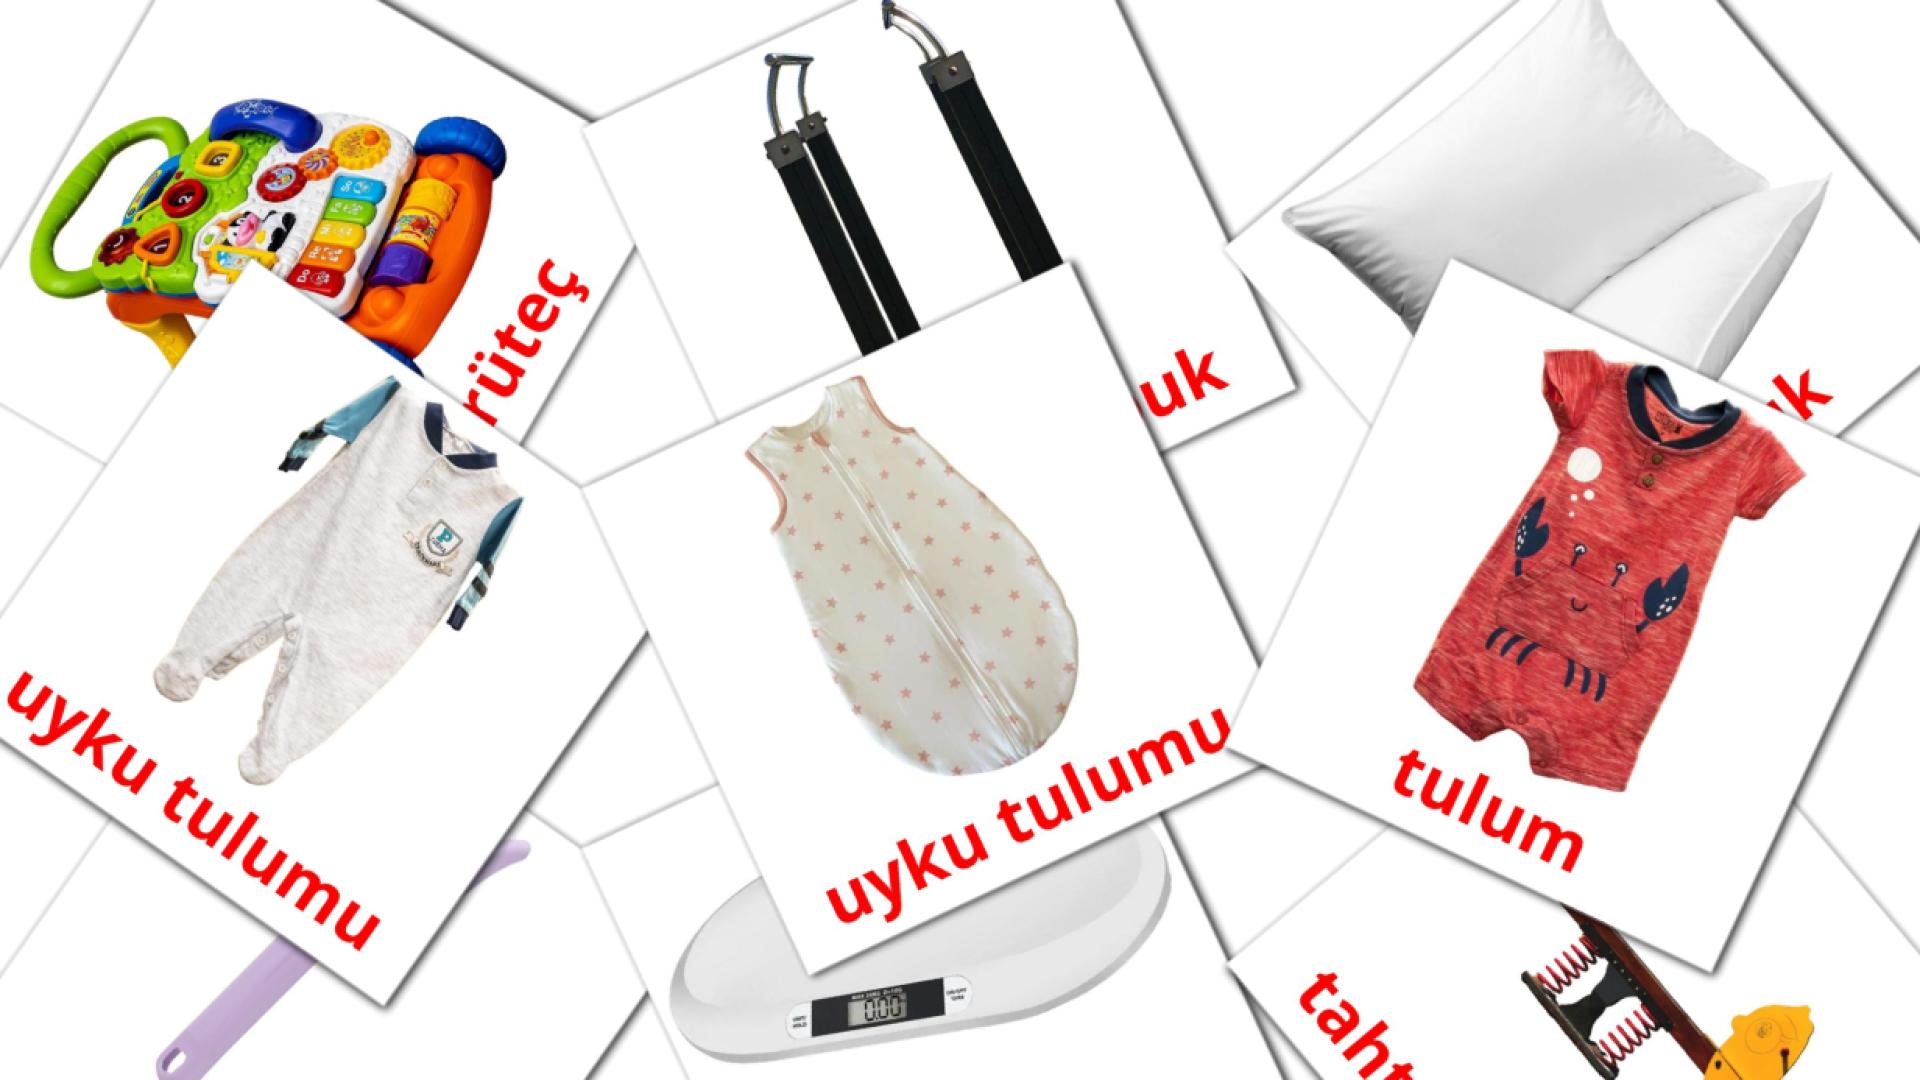 Bebek turkish vocabulary flashcards